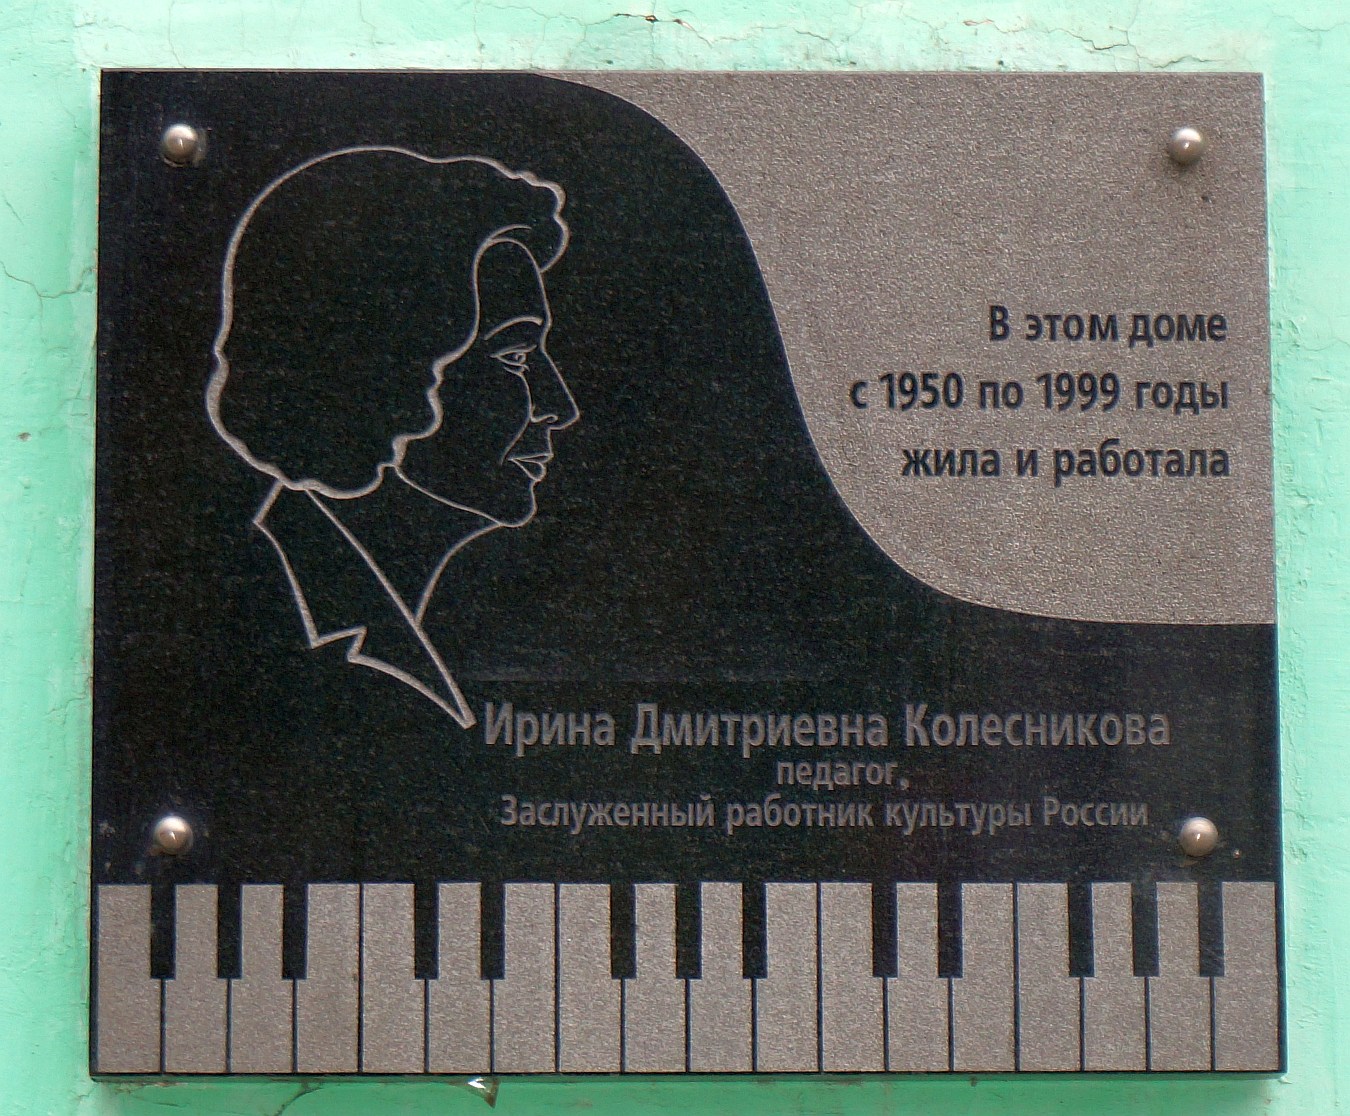 Perm, Улица Павла Соловьева, 5. Perm — Memorial plaques